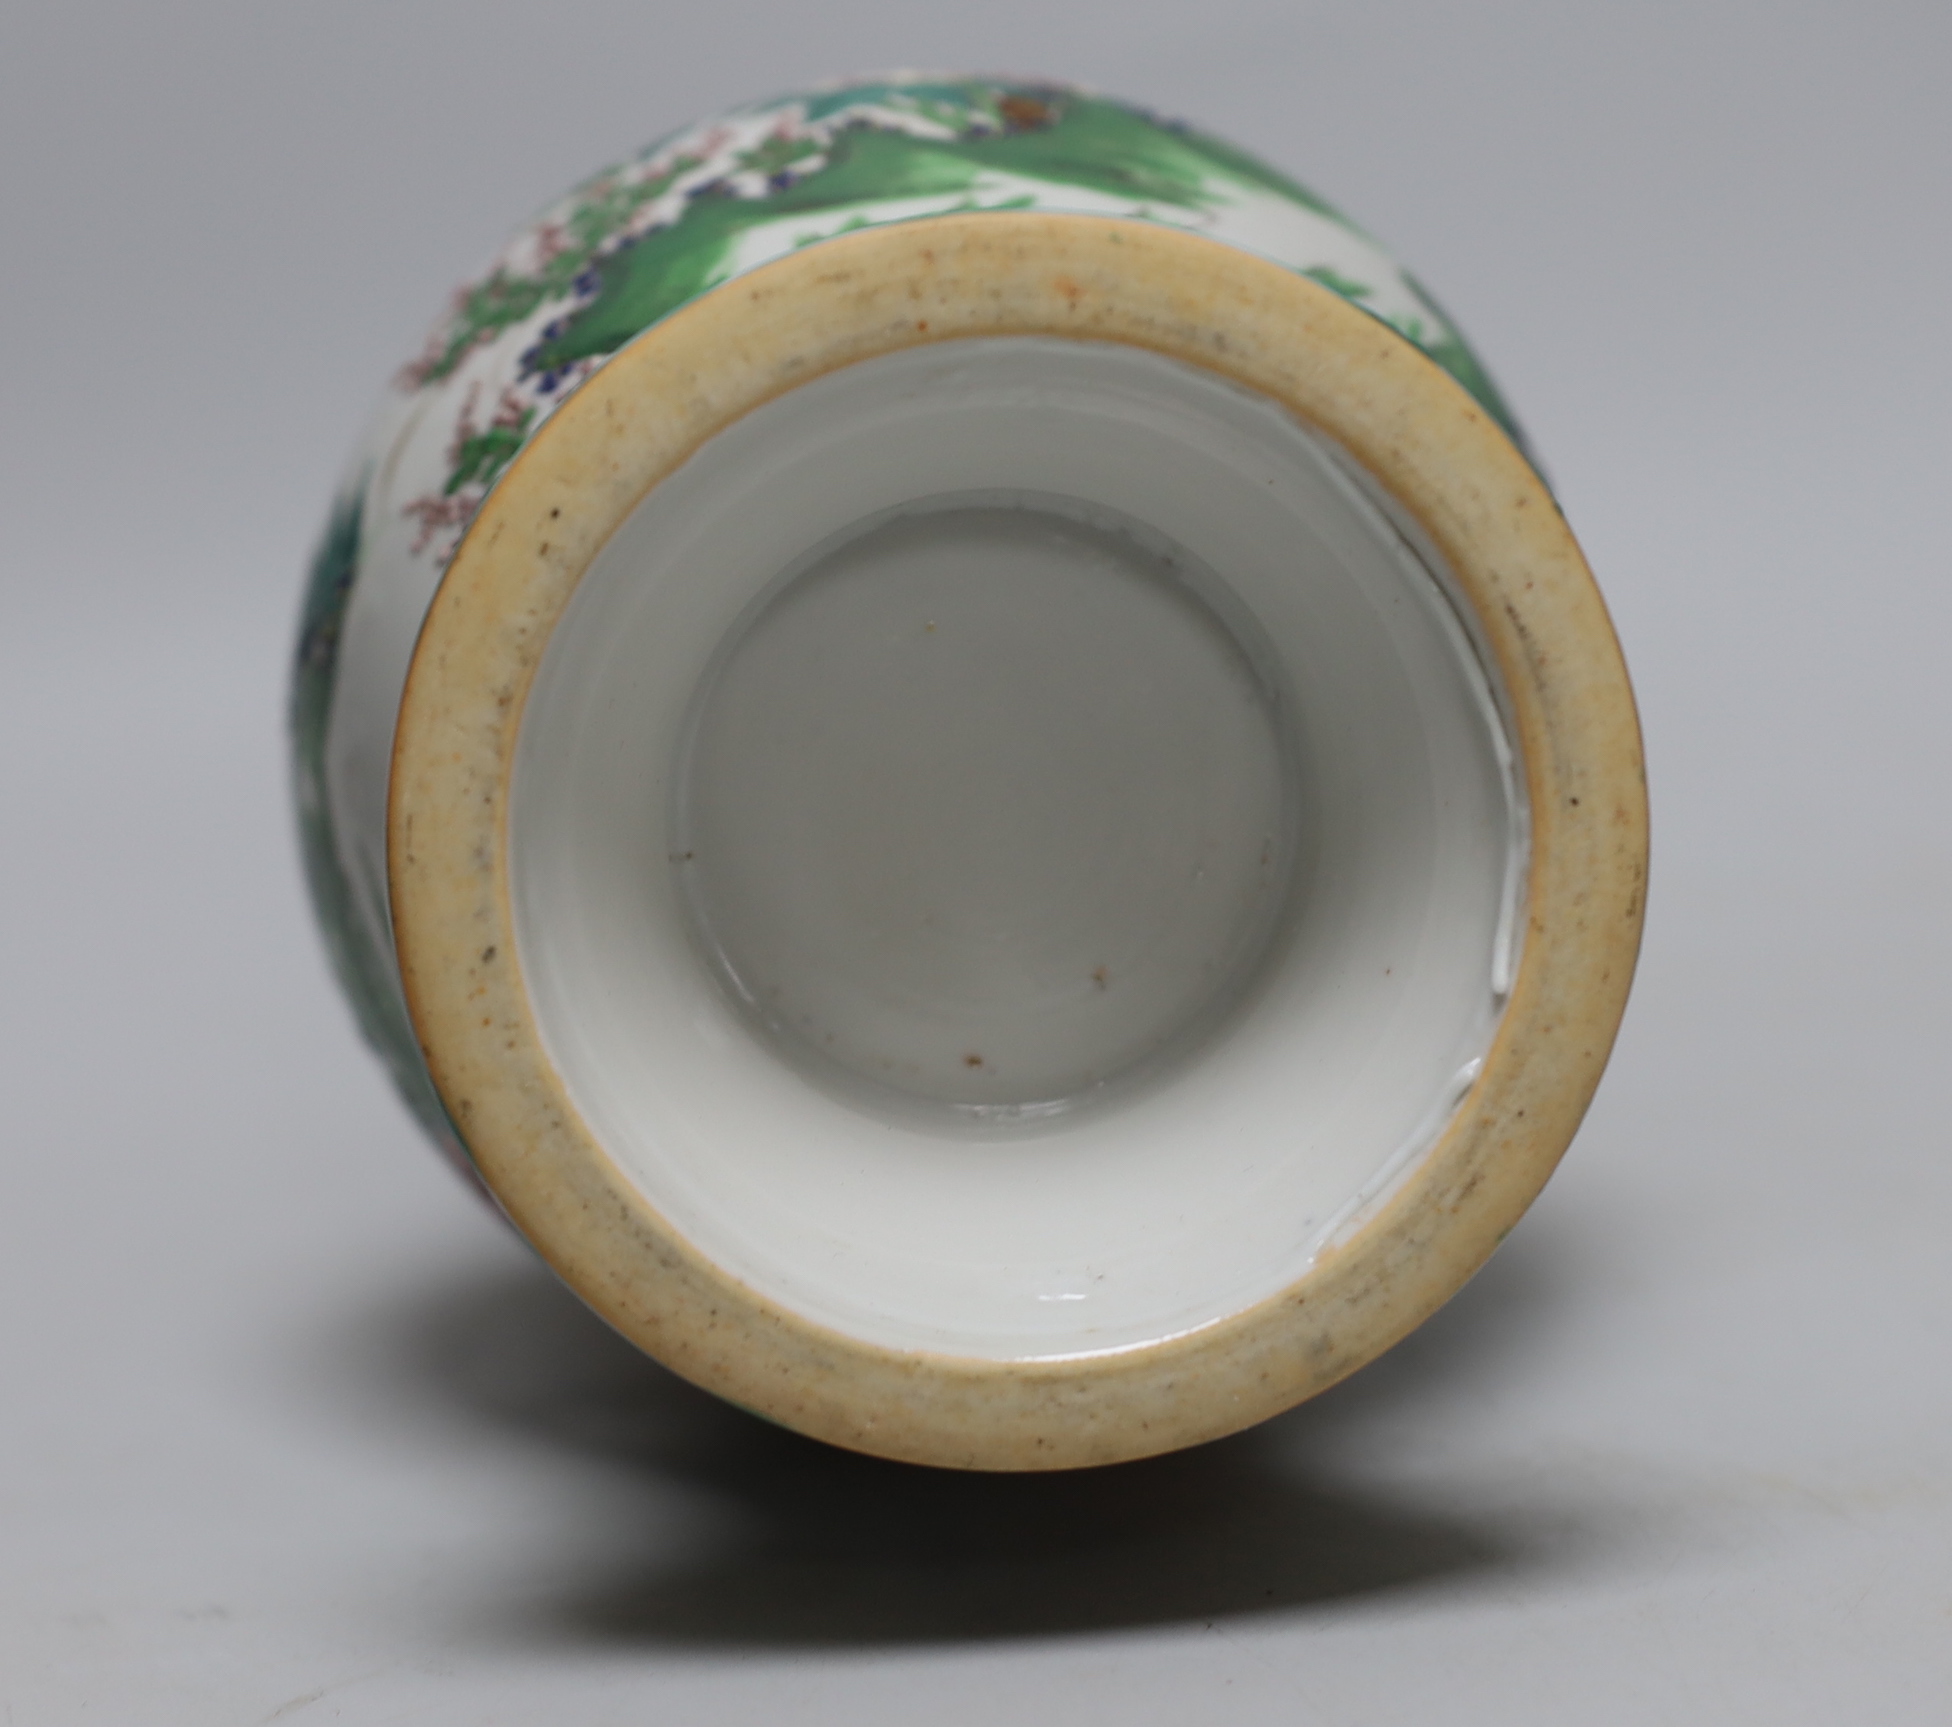 A Japanese enamelled porcelain vase, late 19th century, 29.5cm